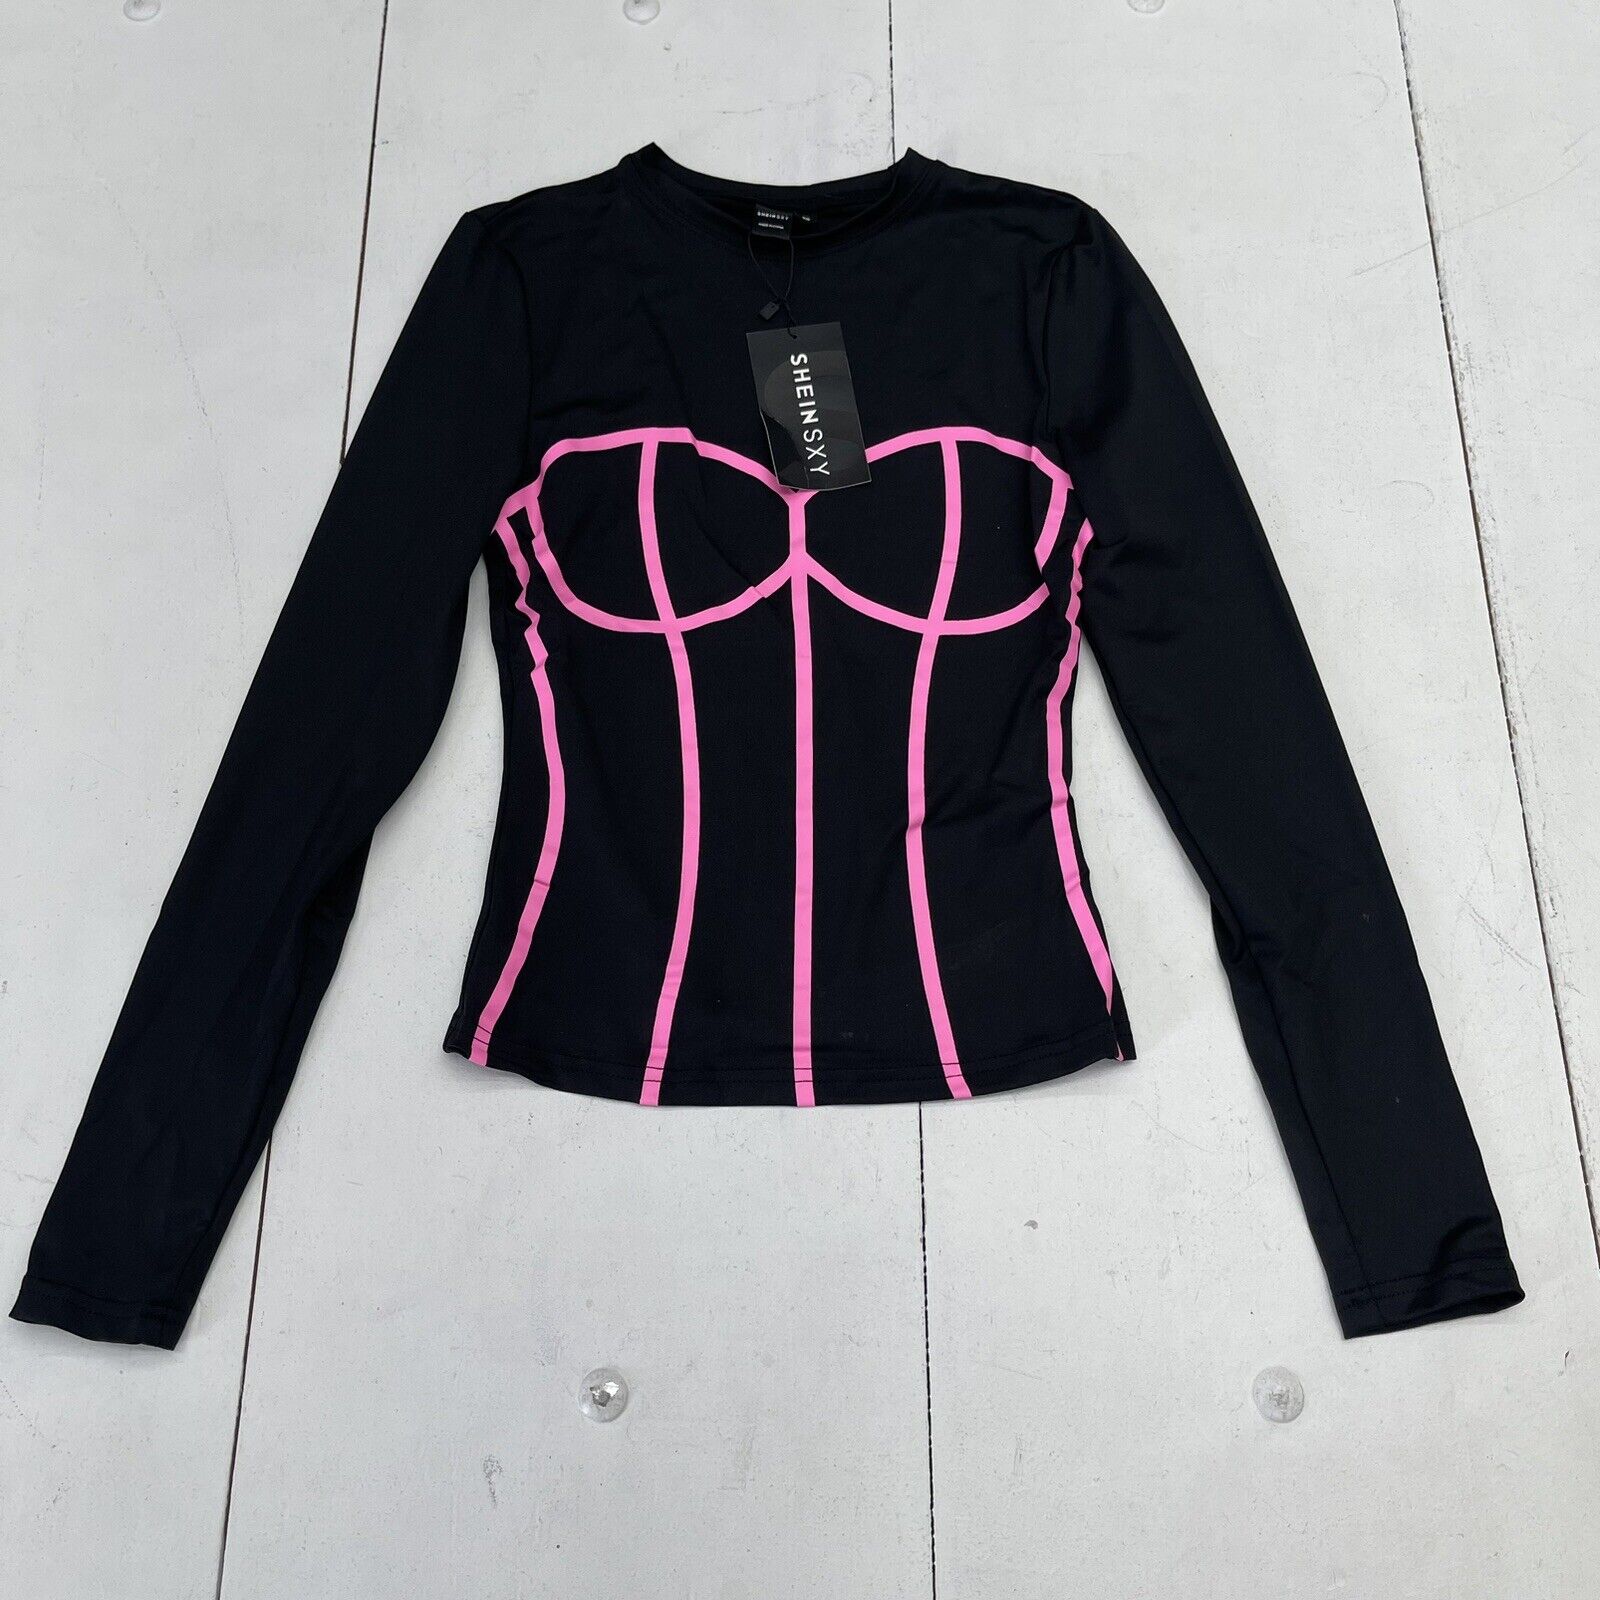 SHEIN CURVE - The cutest black top is now in stock 🤩🖤 IG:@_iamcurvychic  Shop Item #: 2123190 Size:4xl  #SHEIN #SHEINgals # SHEINcurve #SHEINSS21 #fashioninspo